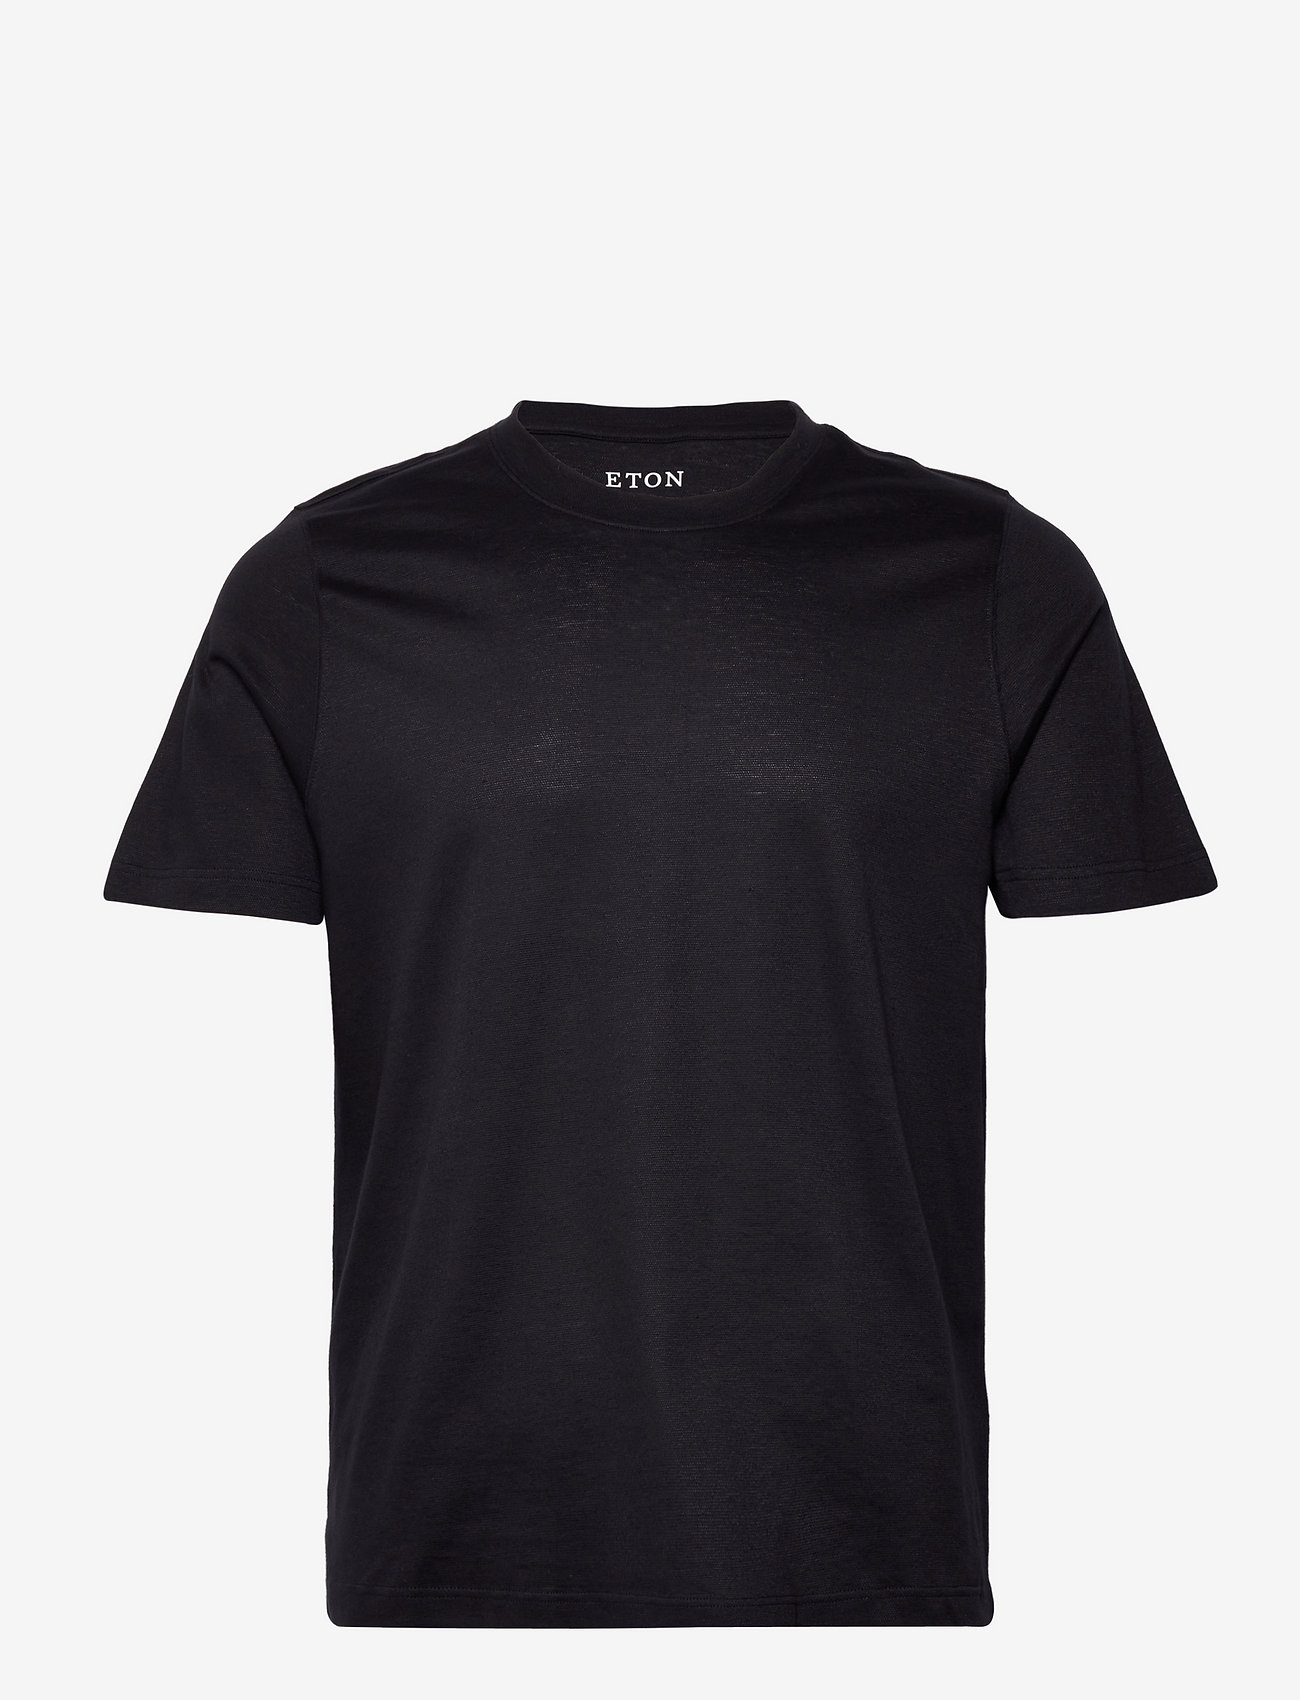 Eton - Men's shirt: Casual  Cotton Linen knit - t-shirts - black - 1